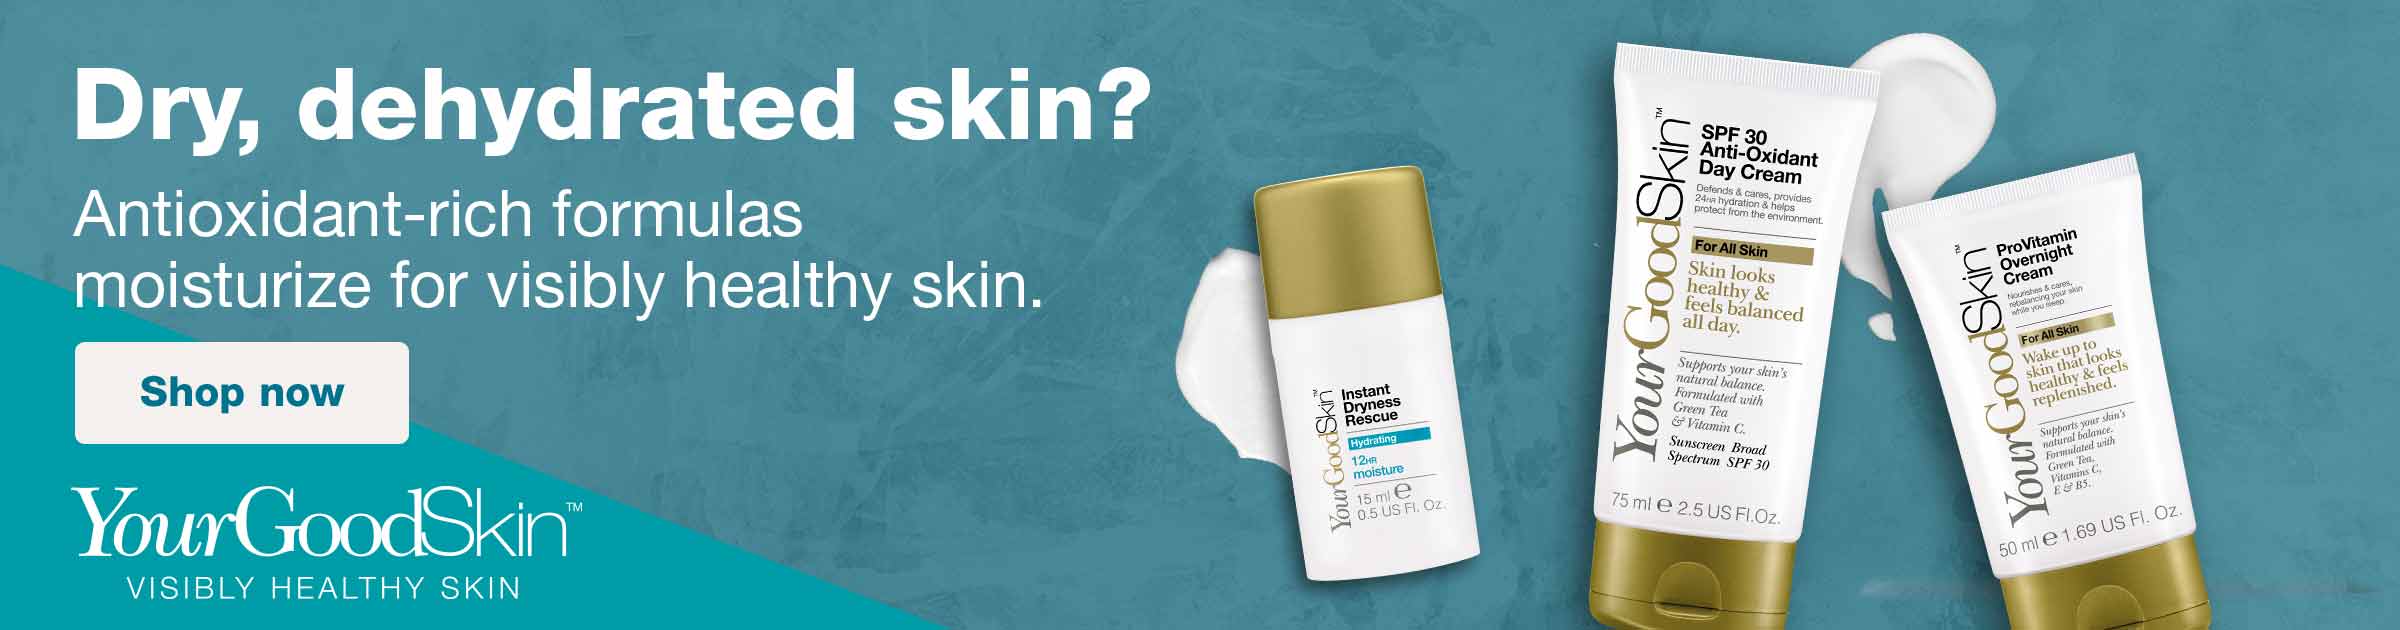 YourGoodSkin(TM). Visibly Healthy Skin. Dry, dehydrated skin? Antioxidant-rich formulas moisturize for visibly healthy skin. Shop now.